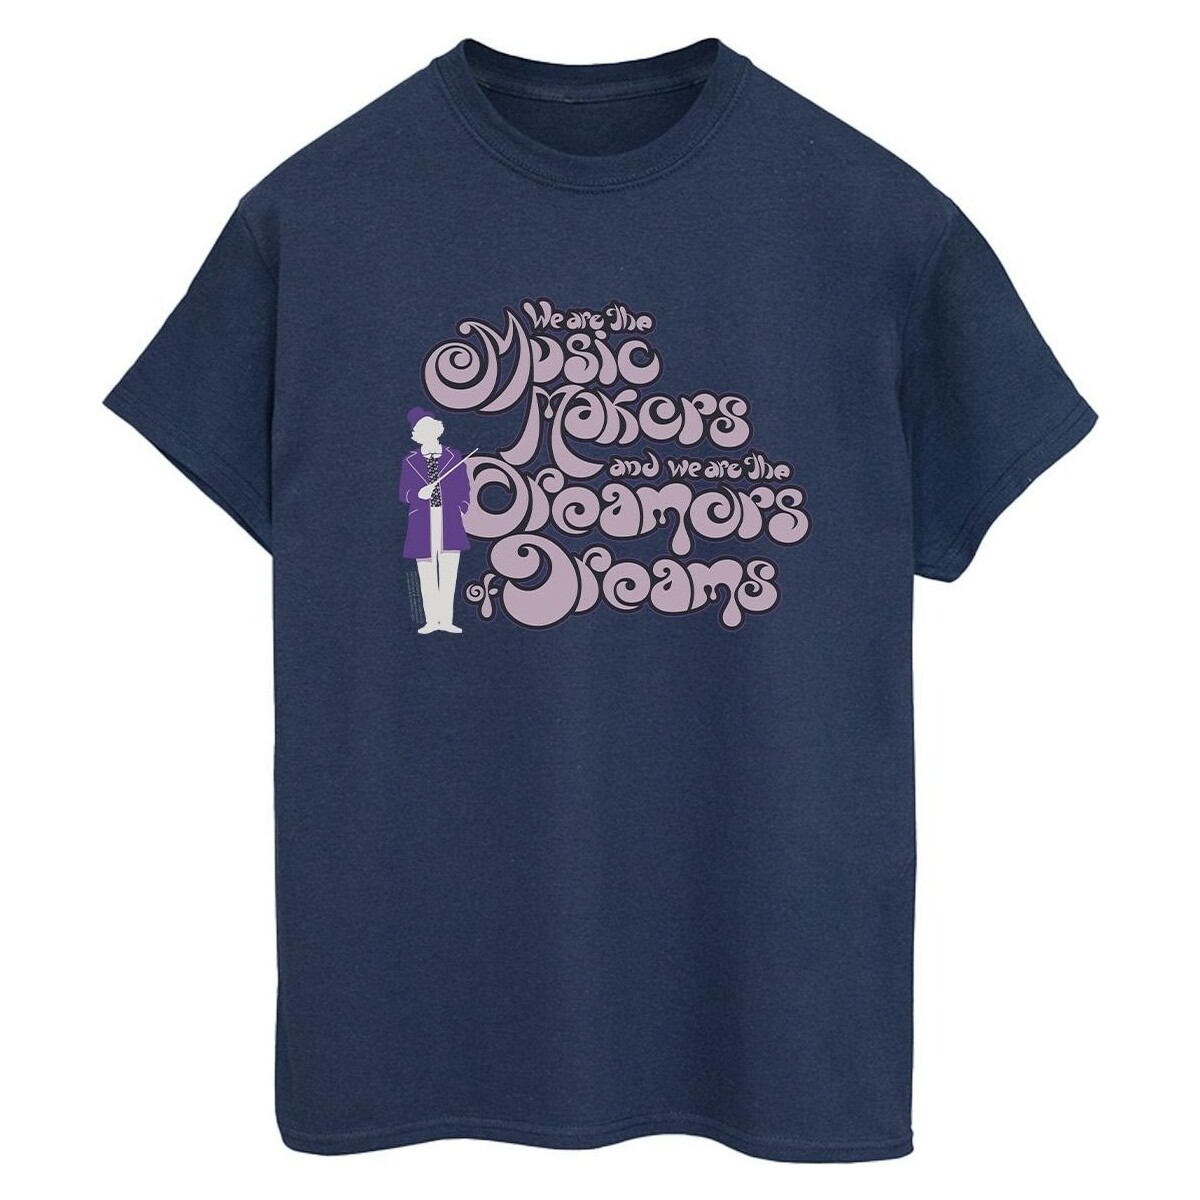 textil Mujer Camisetas manga larga Willy Wonka Dreamers Text Azul